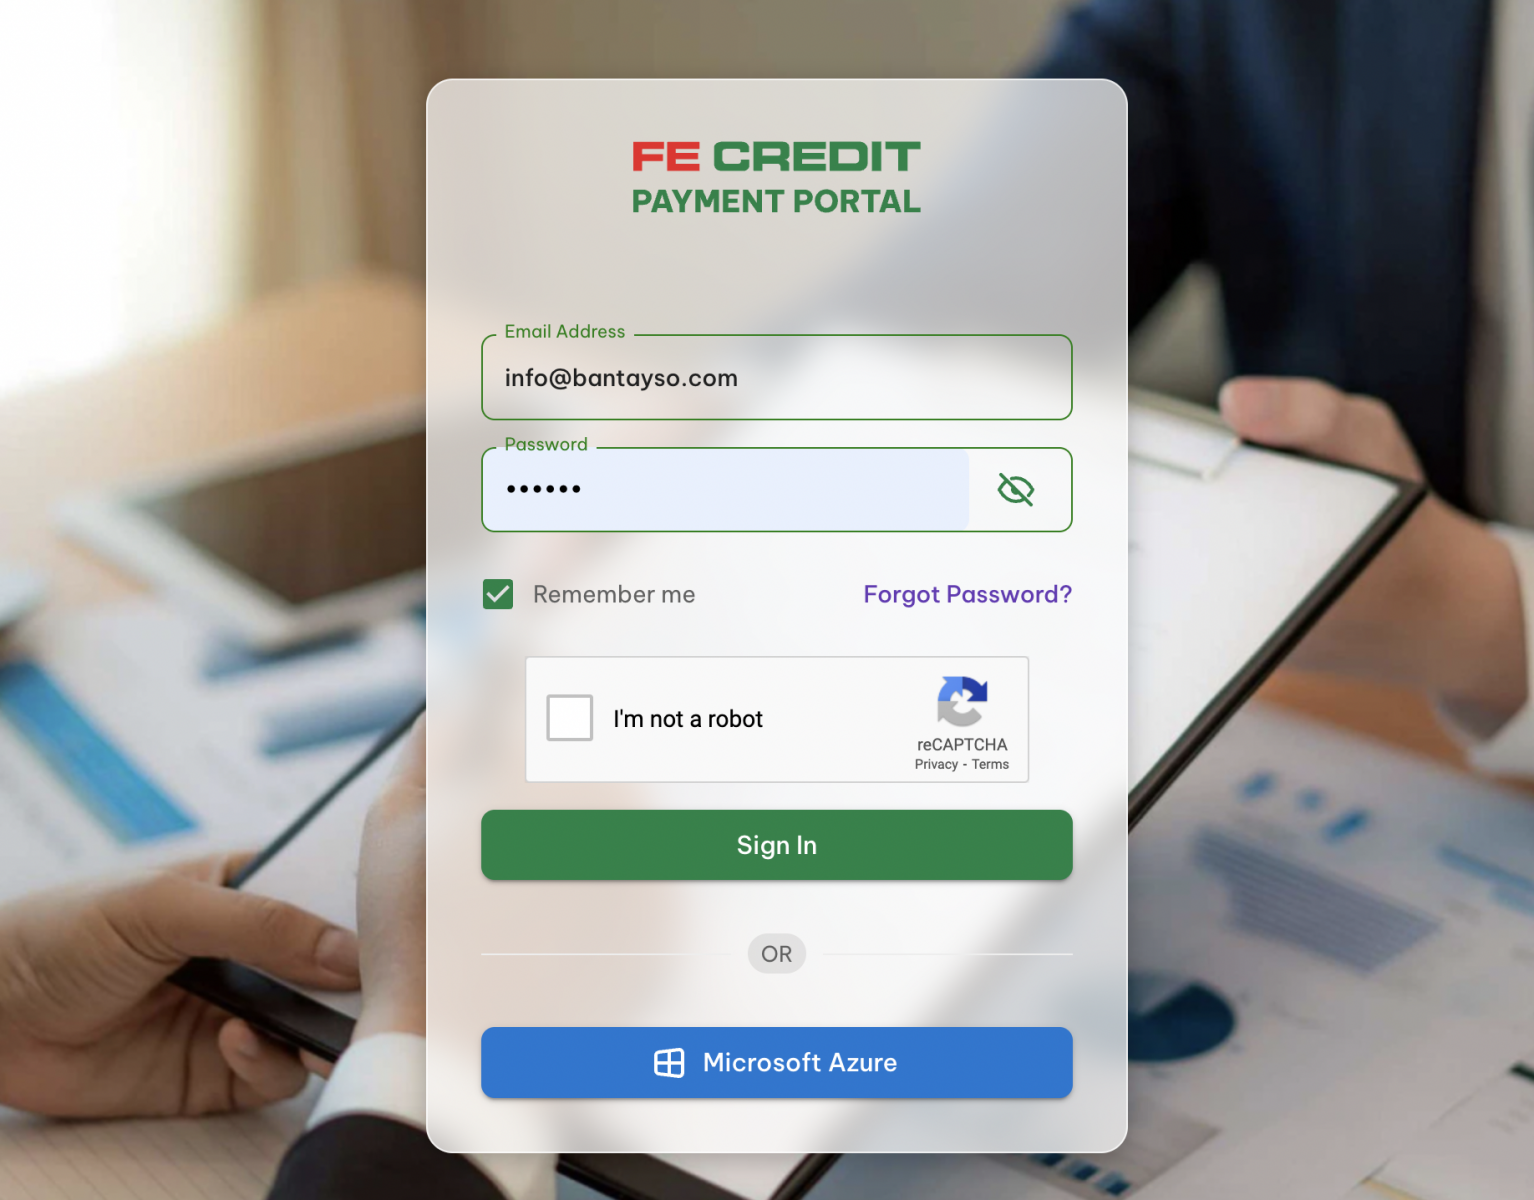 Develop the payment portal for FE Credit - Fintech